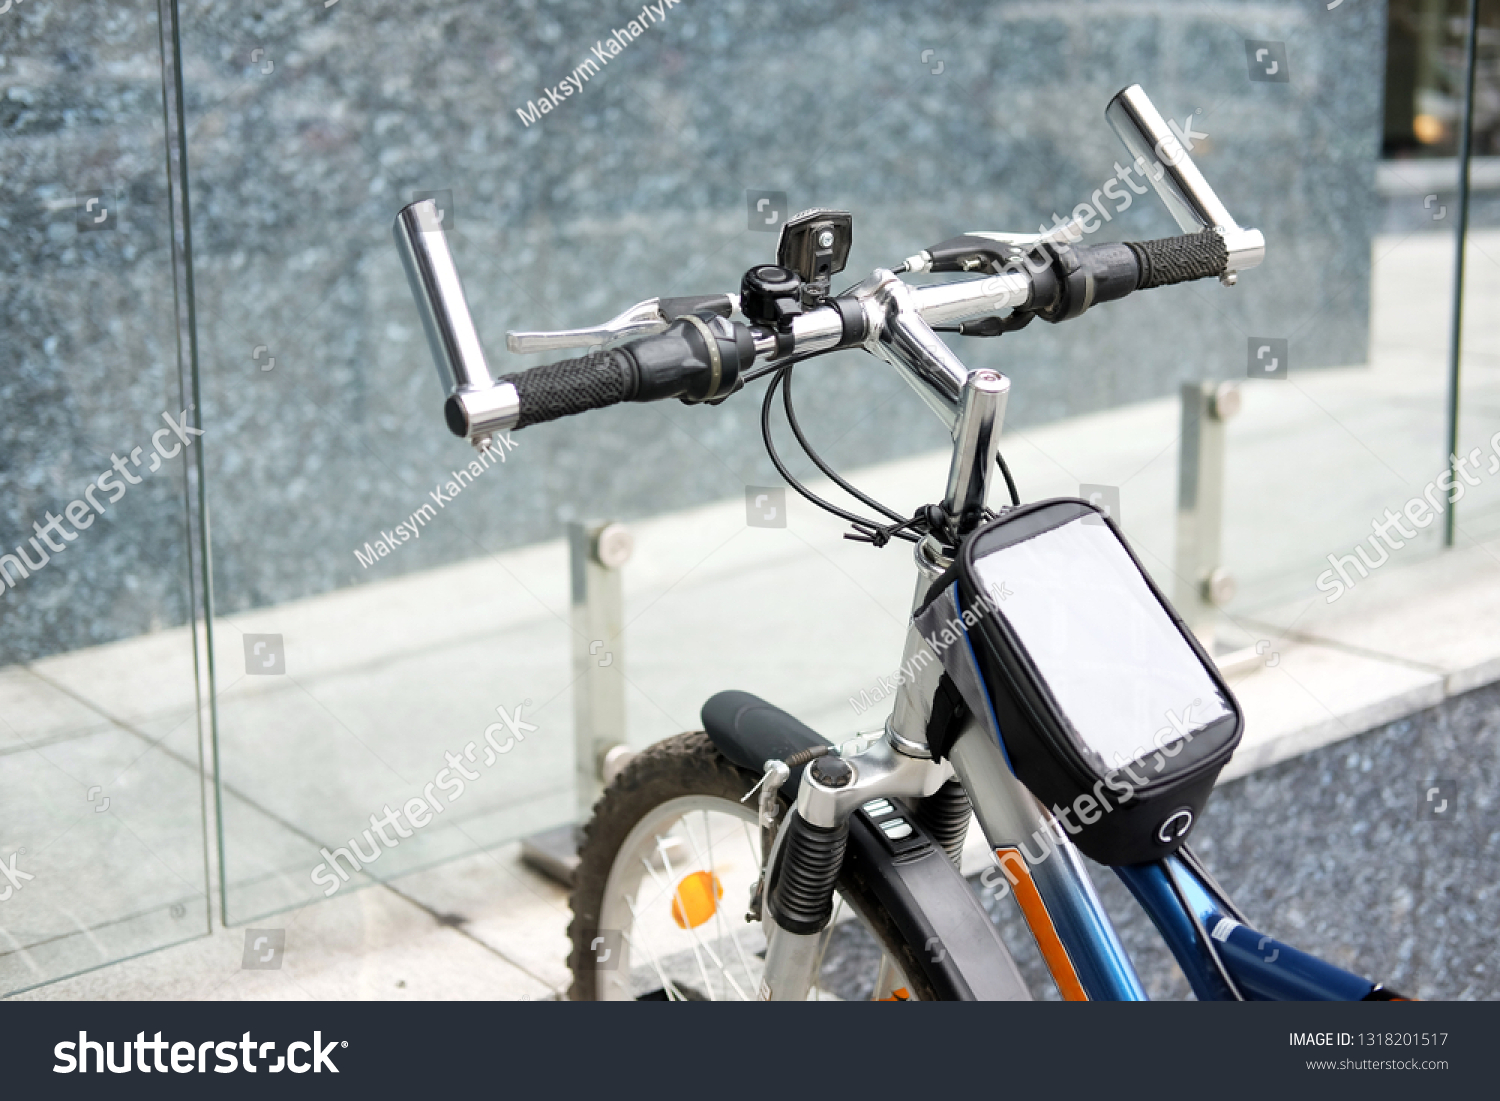 bike with gps